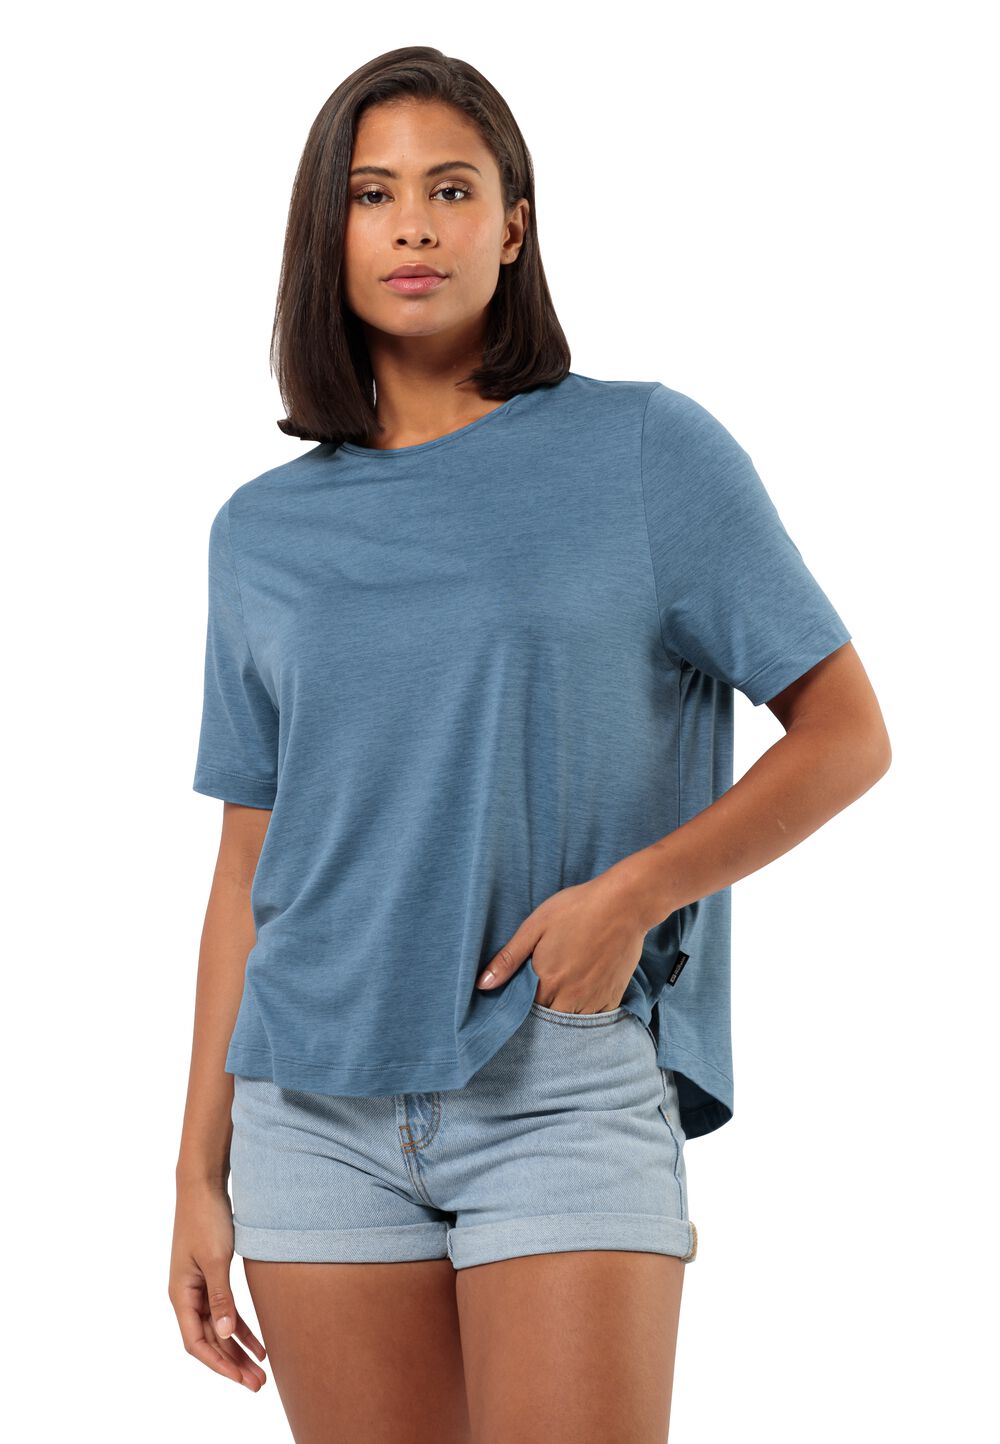 Jack Wolfskin Travel T-Shirt Women Functioneel shirt Dames XL elemental blue elemental blue